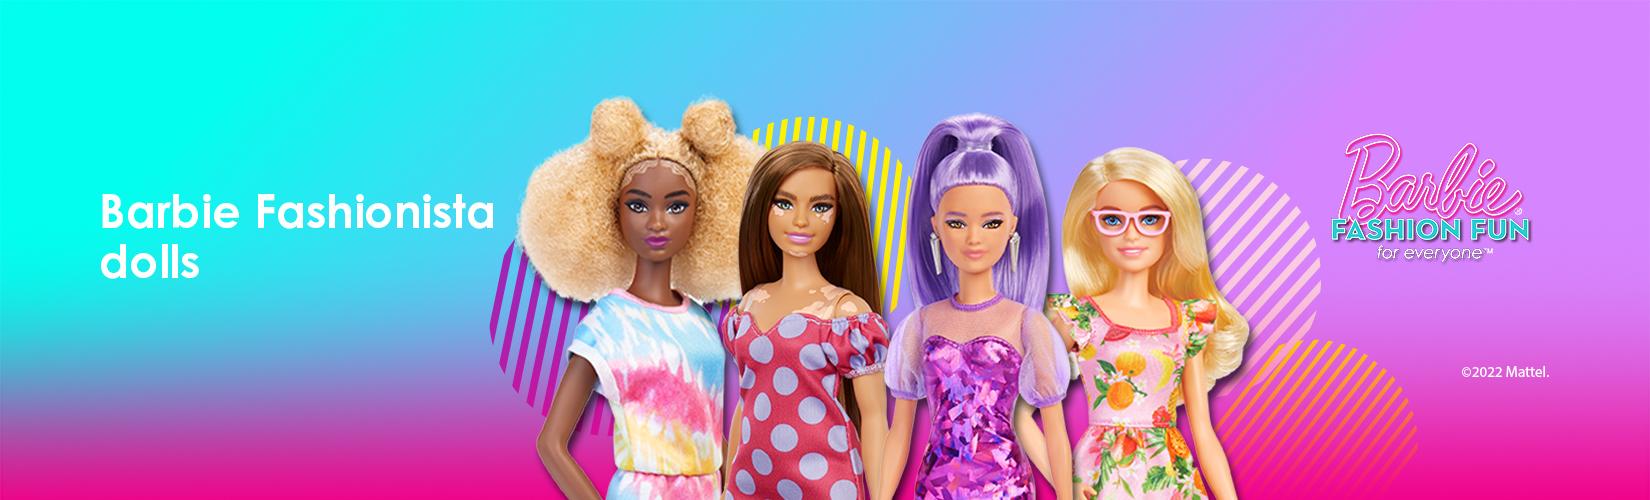 Barbie Fashionista dolls.